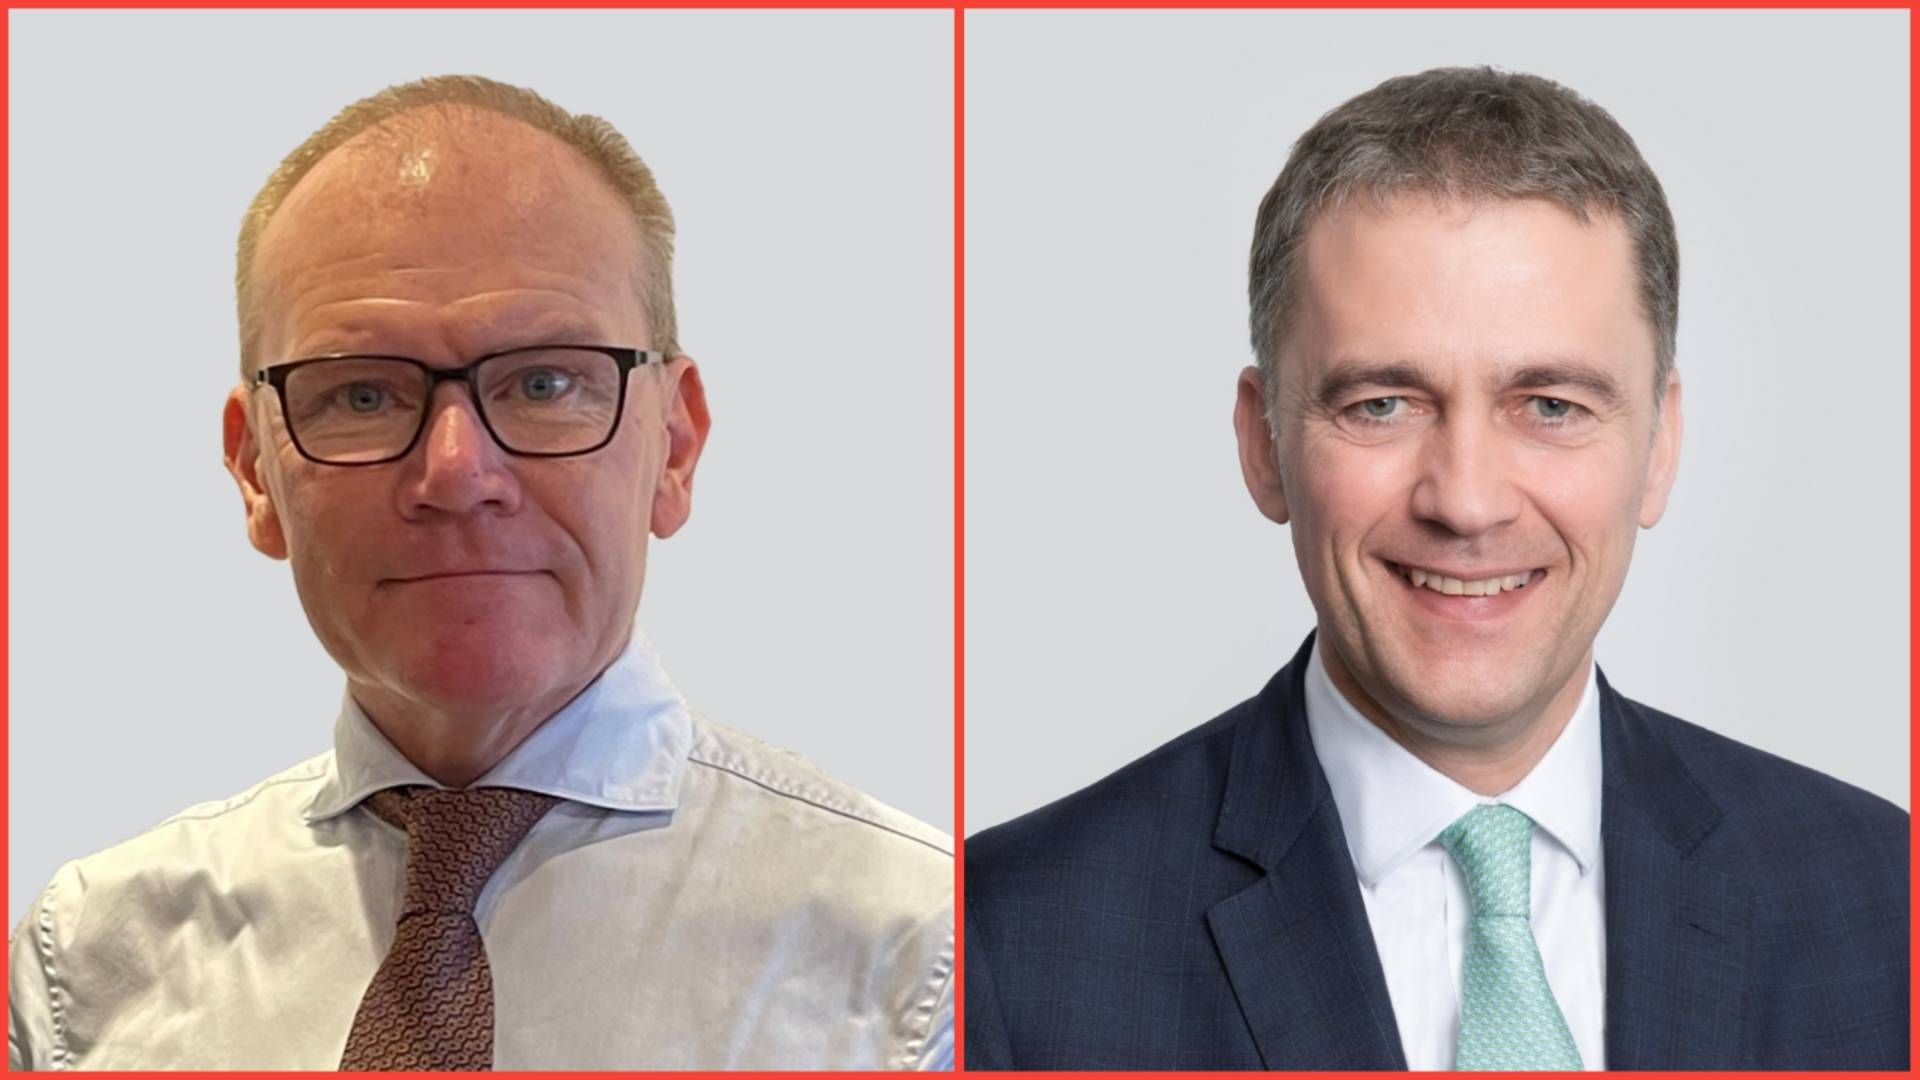 Anders Svenningsen (left), head of Nordics, and Jürgen Breuer (right), head of DACH region at Pemberton Asset Management. | Photo: PR / Pemberton Asset Management